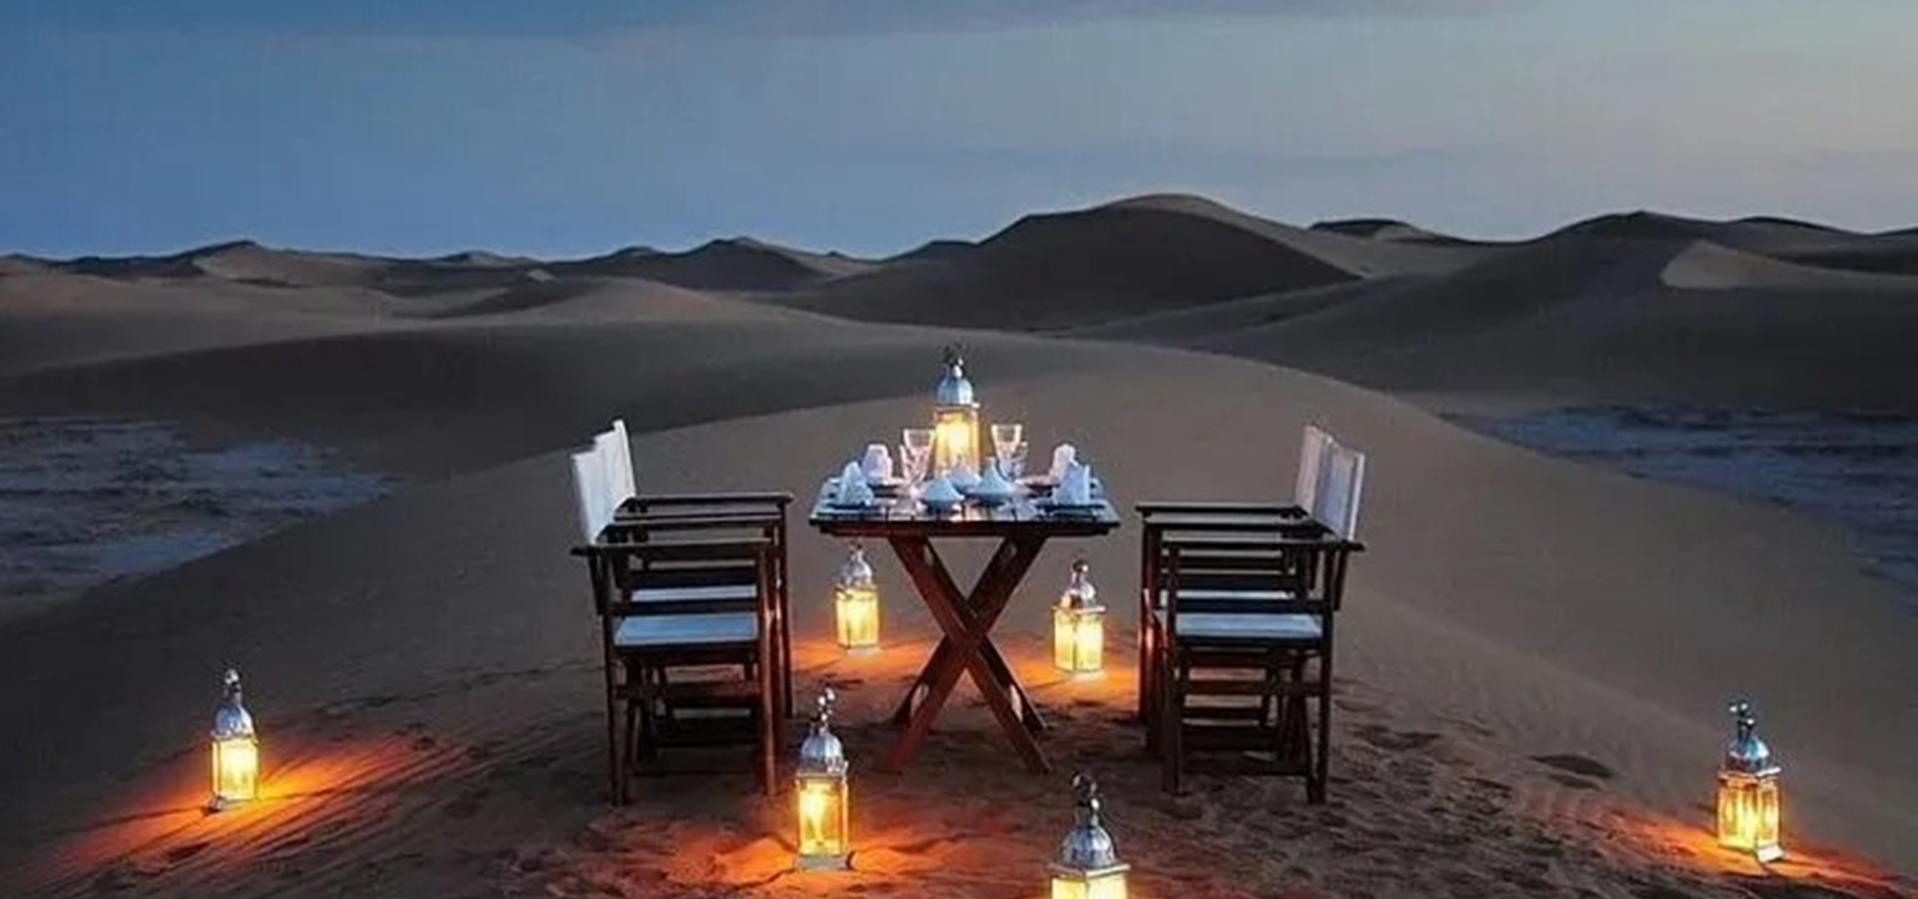 Morocco-luxury-camp